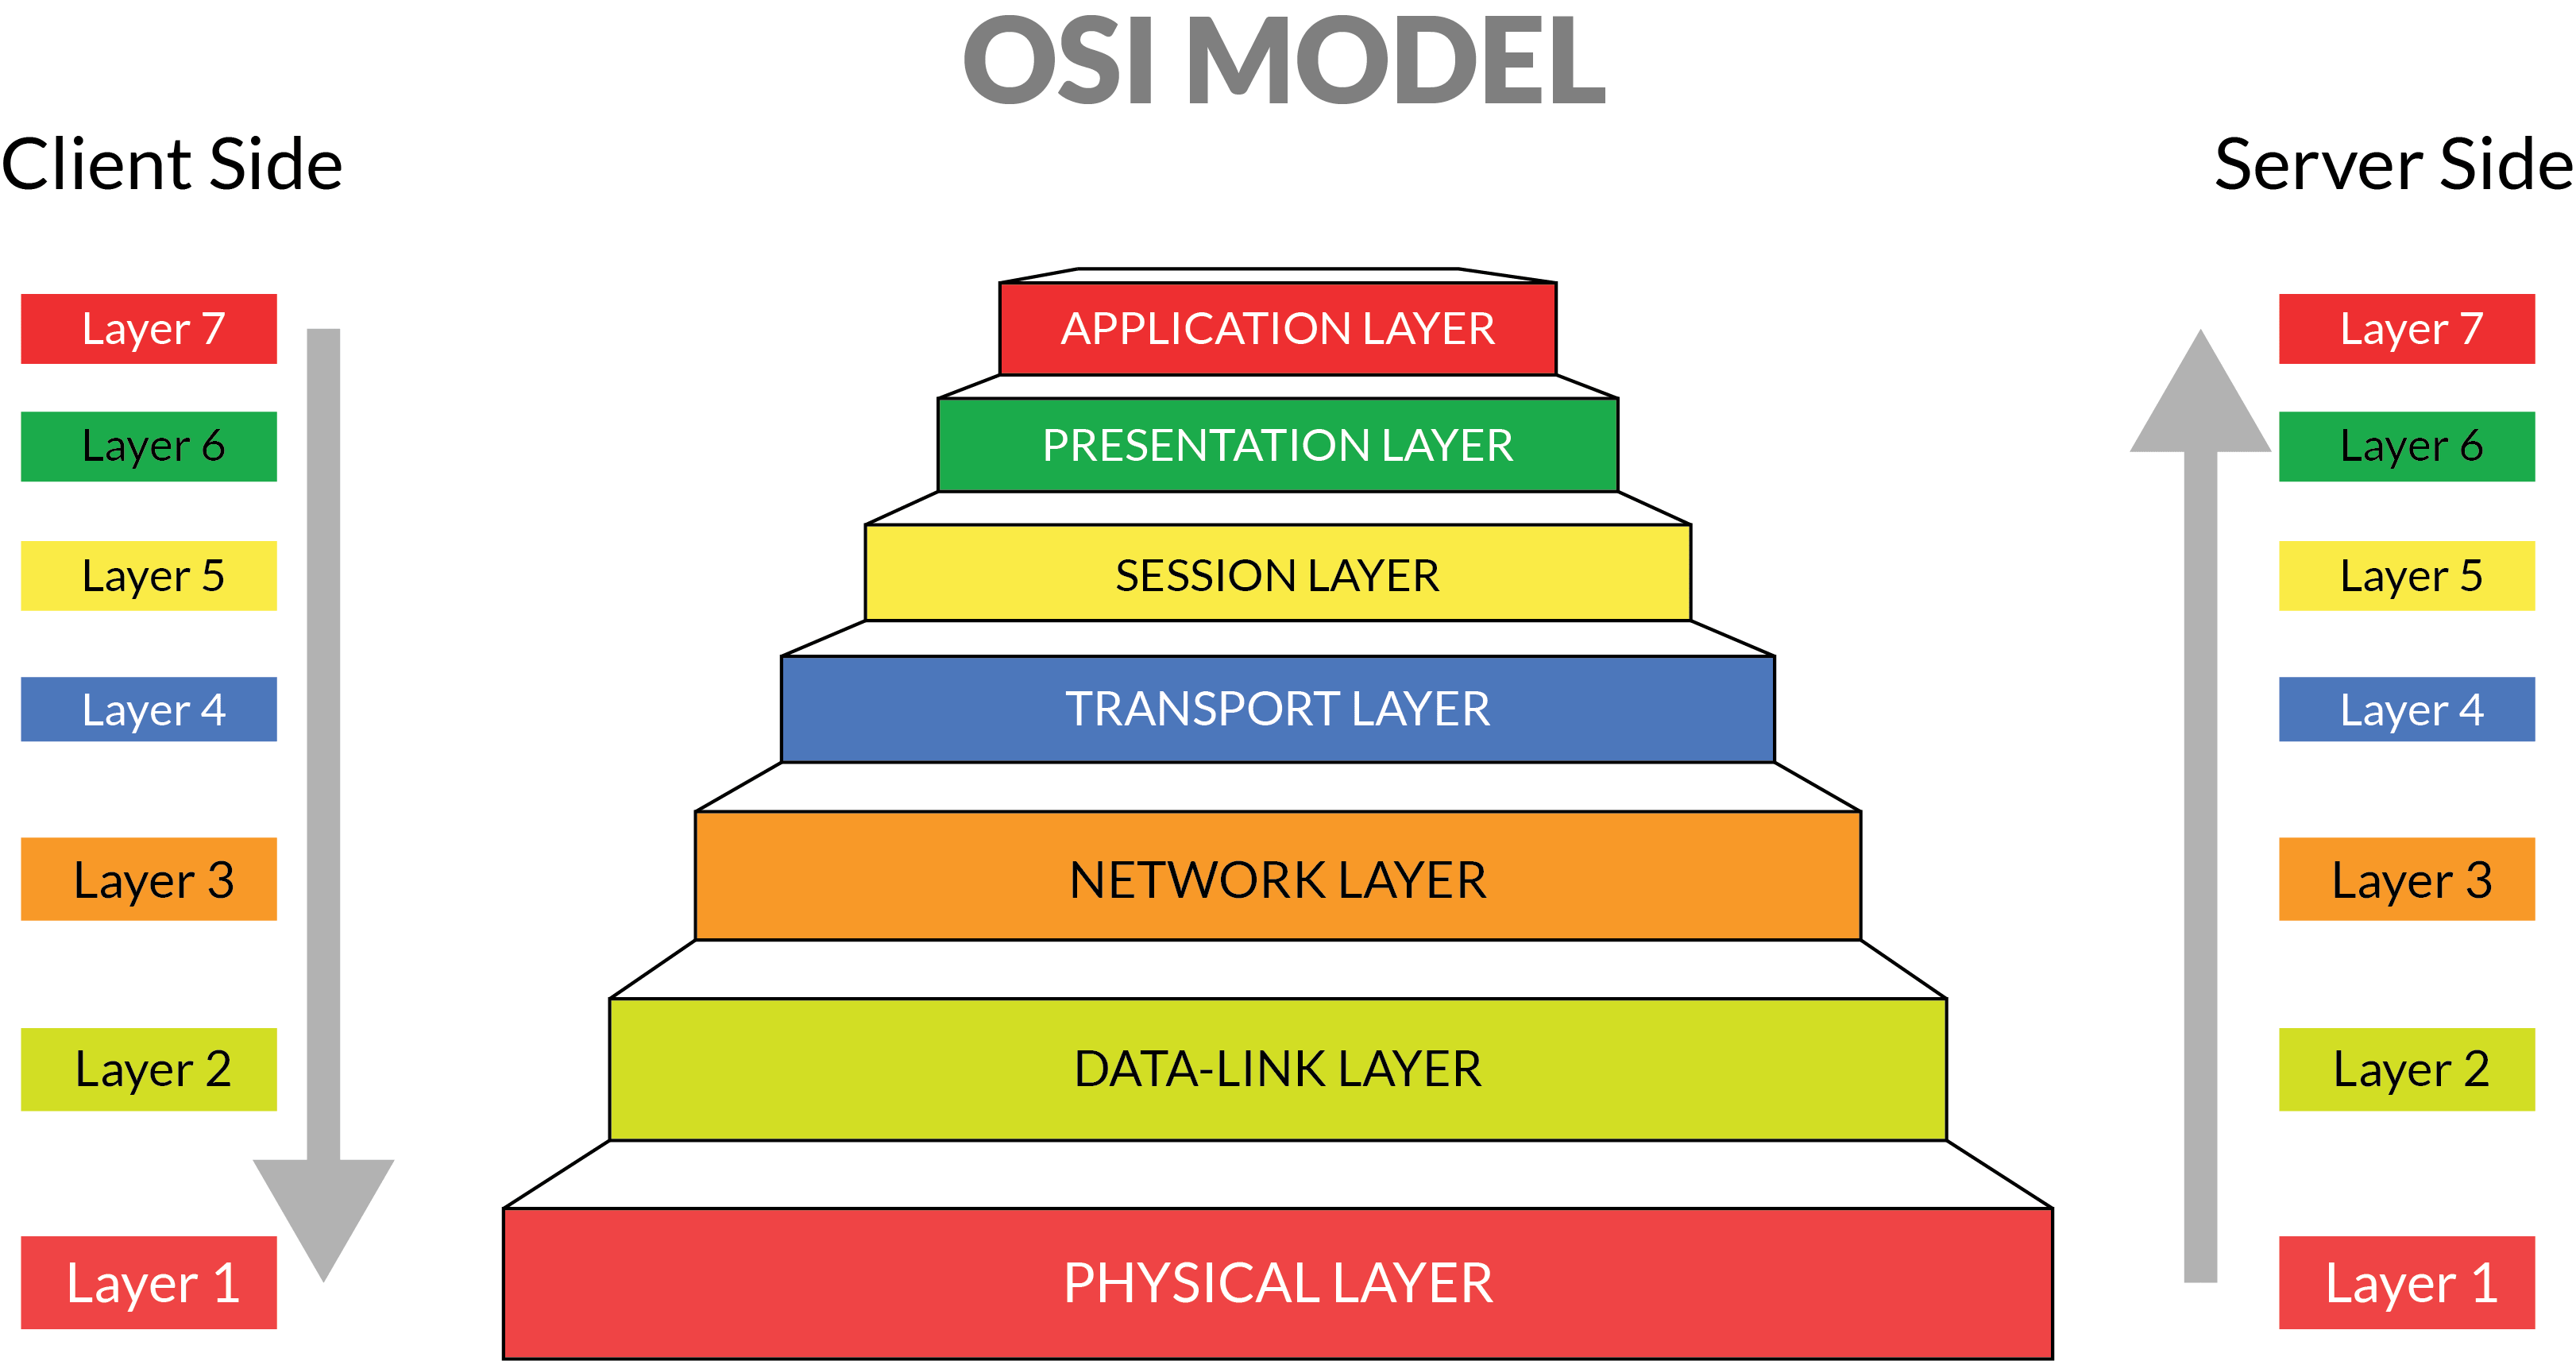 osi model presentation layer